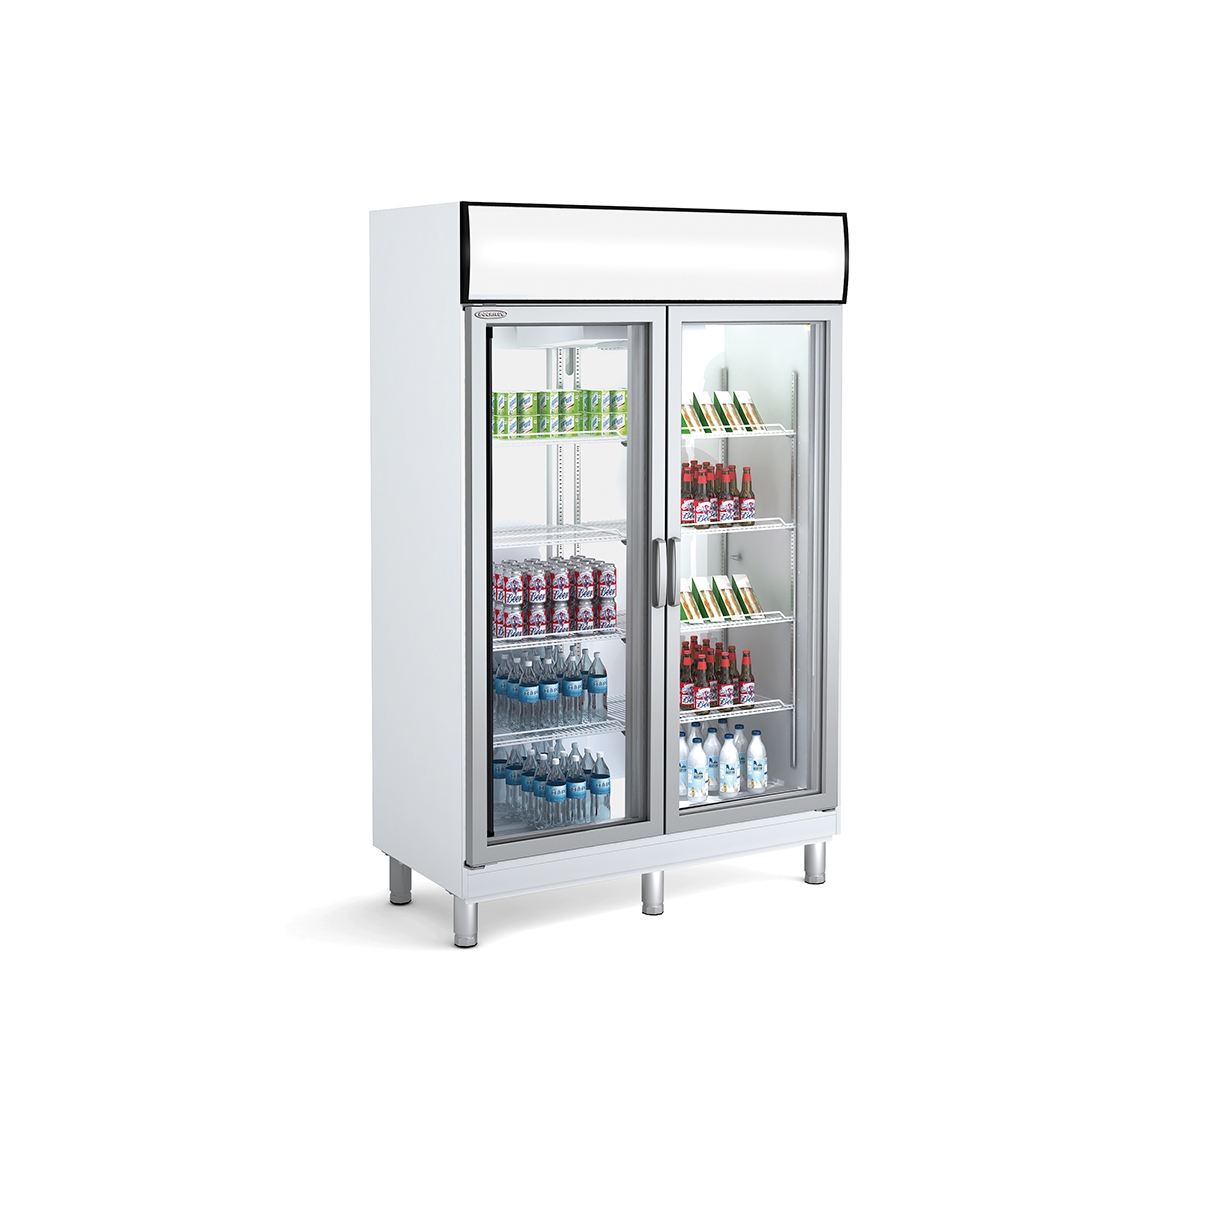 Refrigerated Display Cabinet AGPA-125